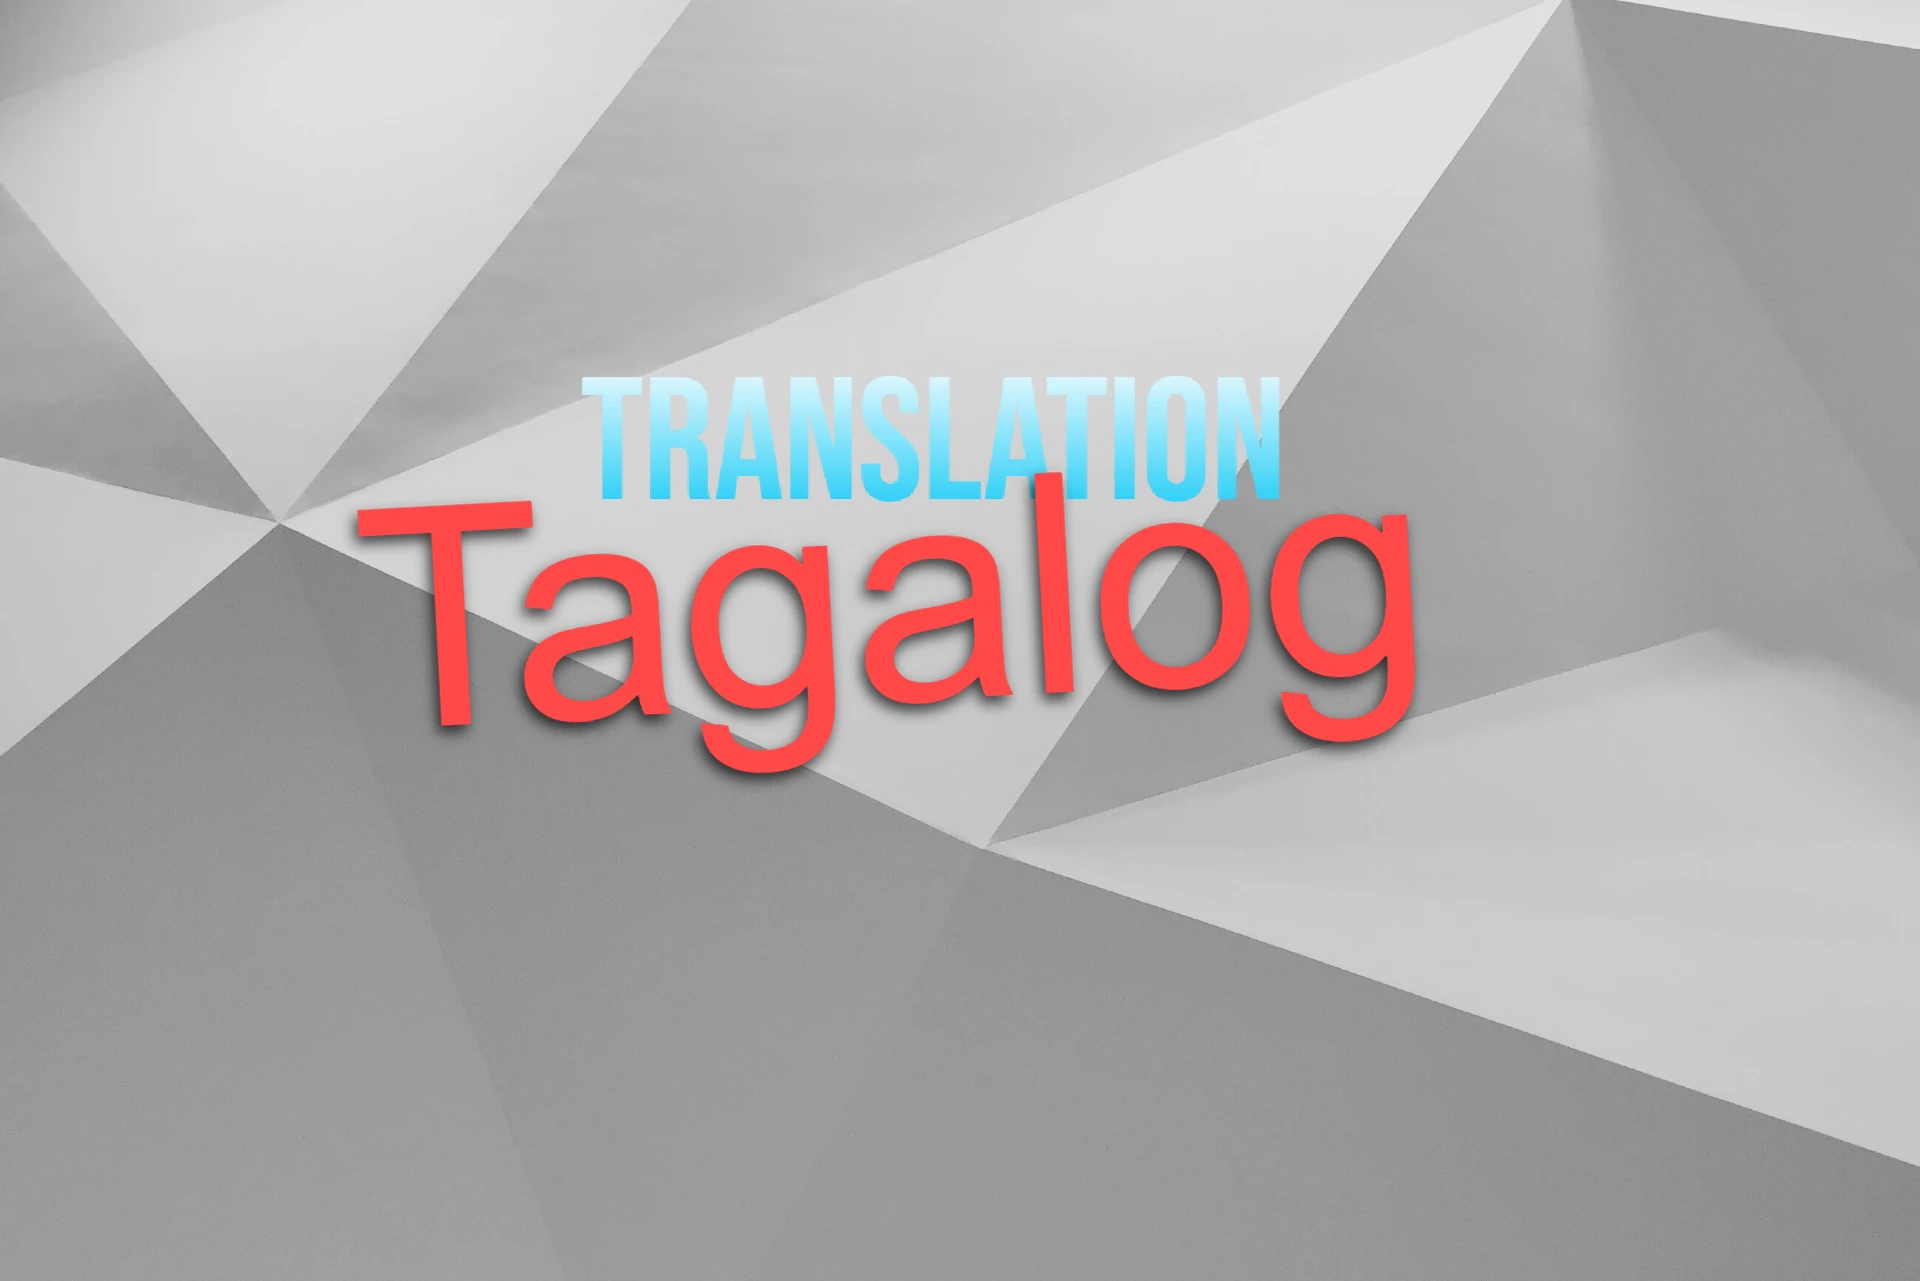 Tagalog Translation